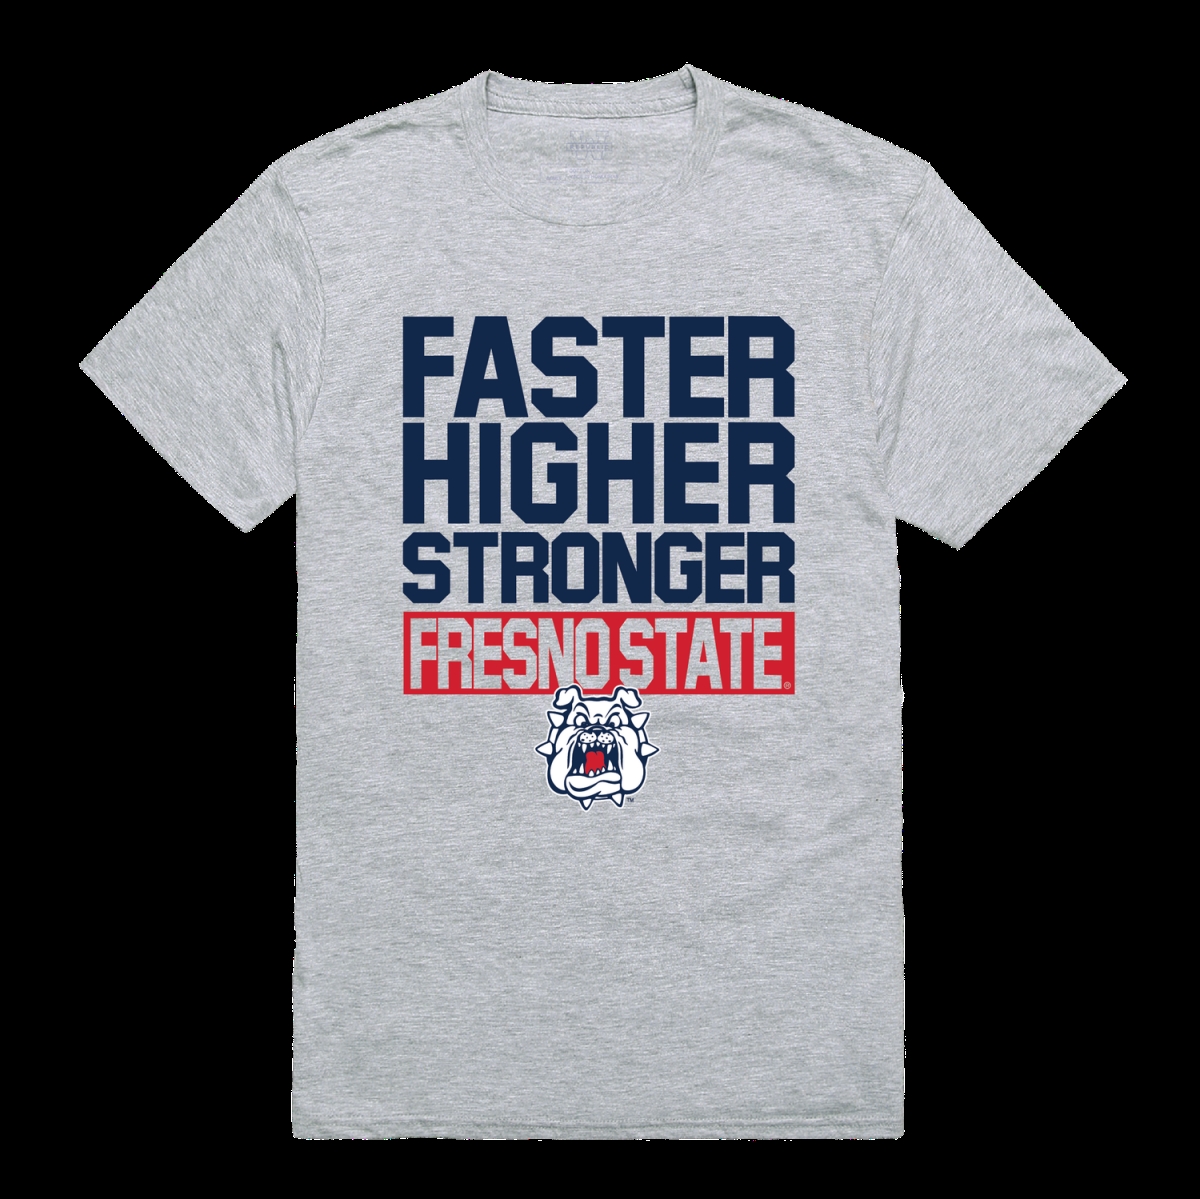 530-169-HG2-02 California State University, Fresno Bulldogs Workout T-Shirt, Heather Grey - Medium -  W Republic